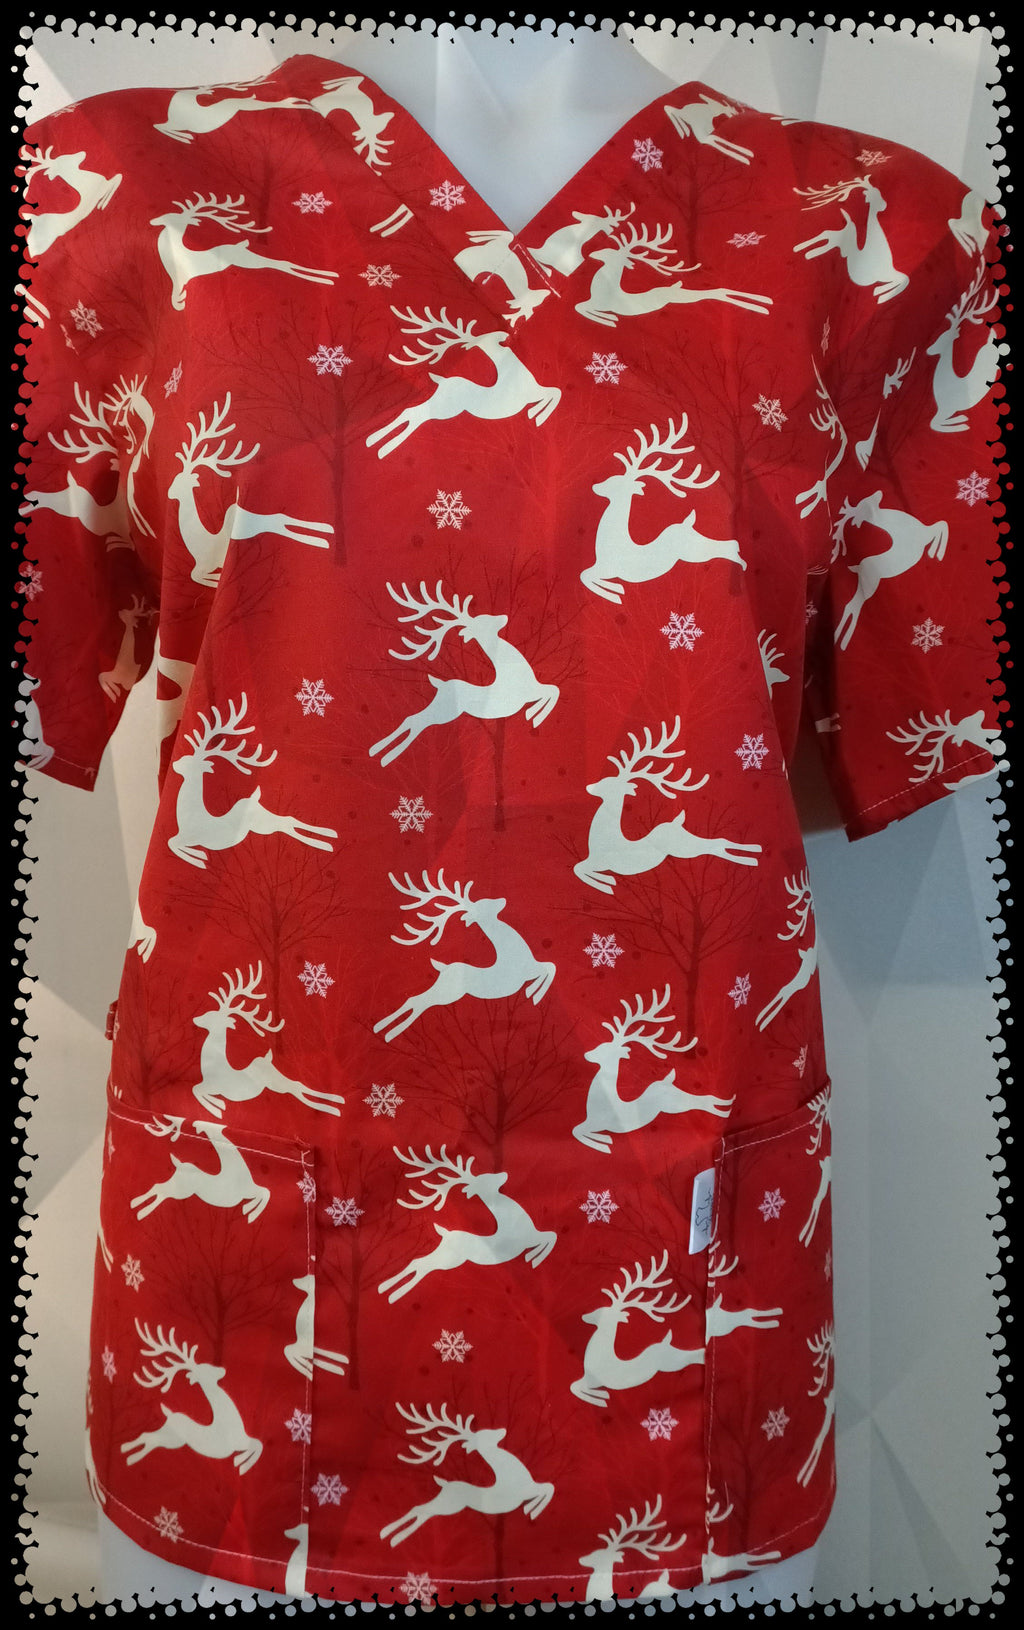 Red fabric, deer, xmas scene